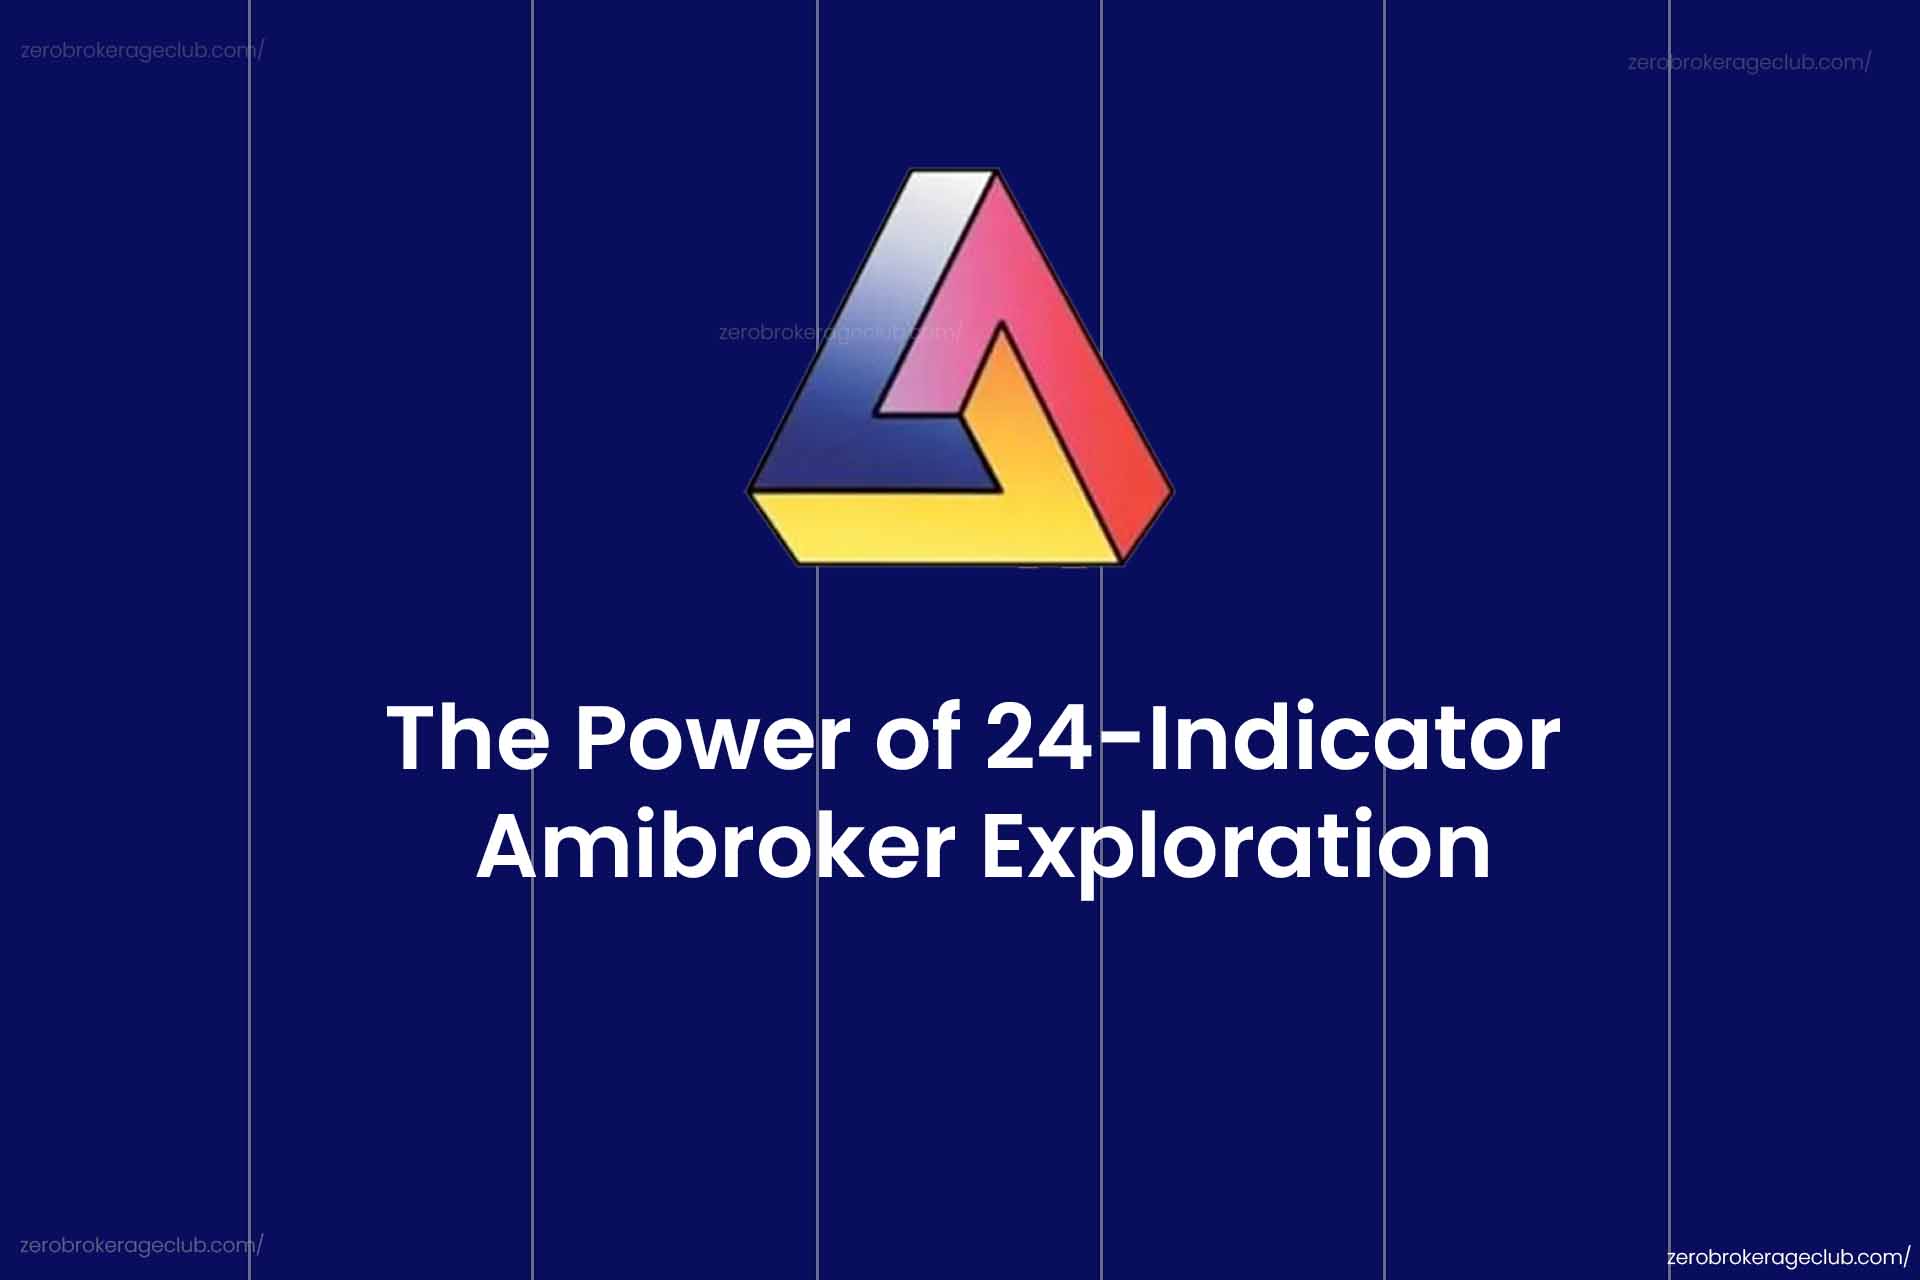 The Power of 24-Indicator Amibroker Exploration